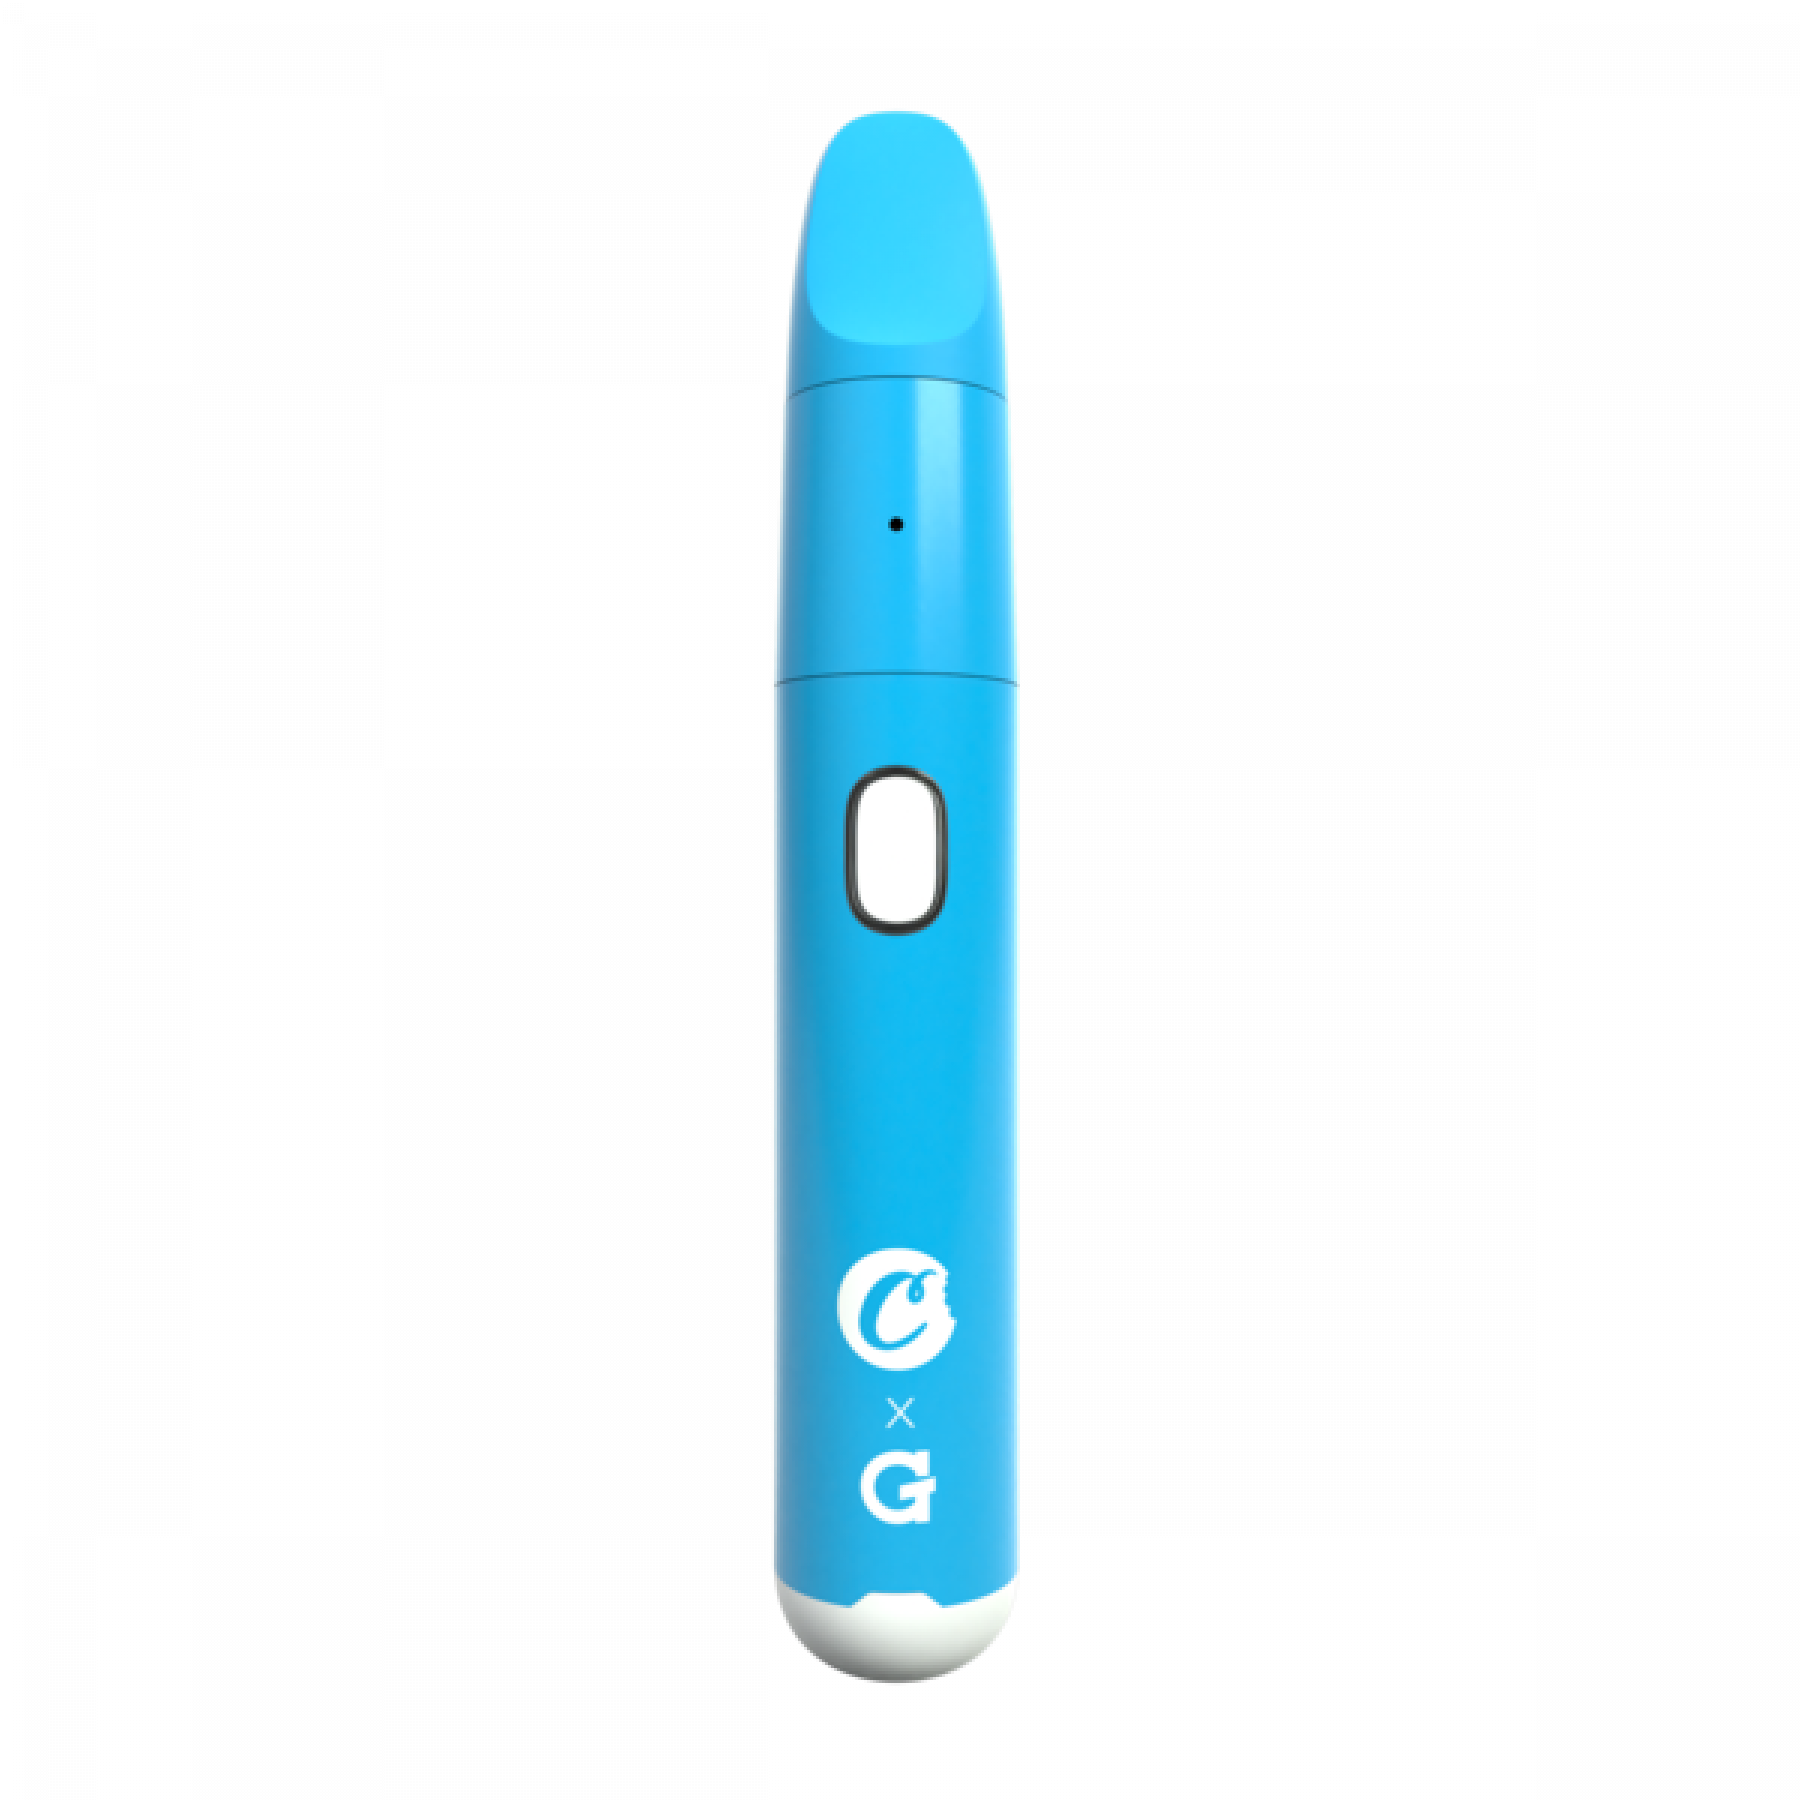 G Pen - Micro+ Vaporizer